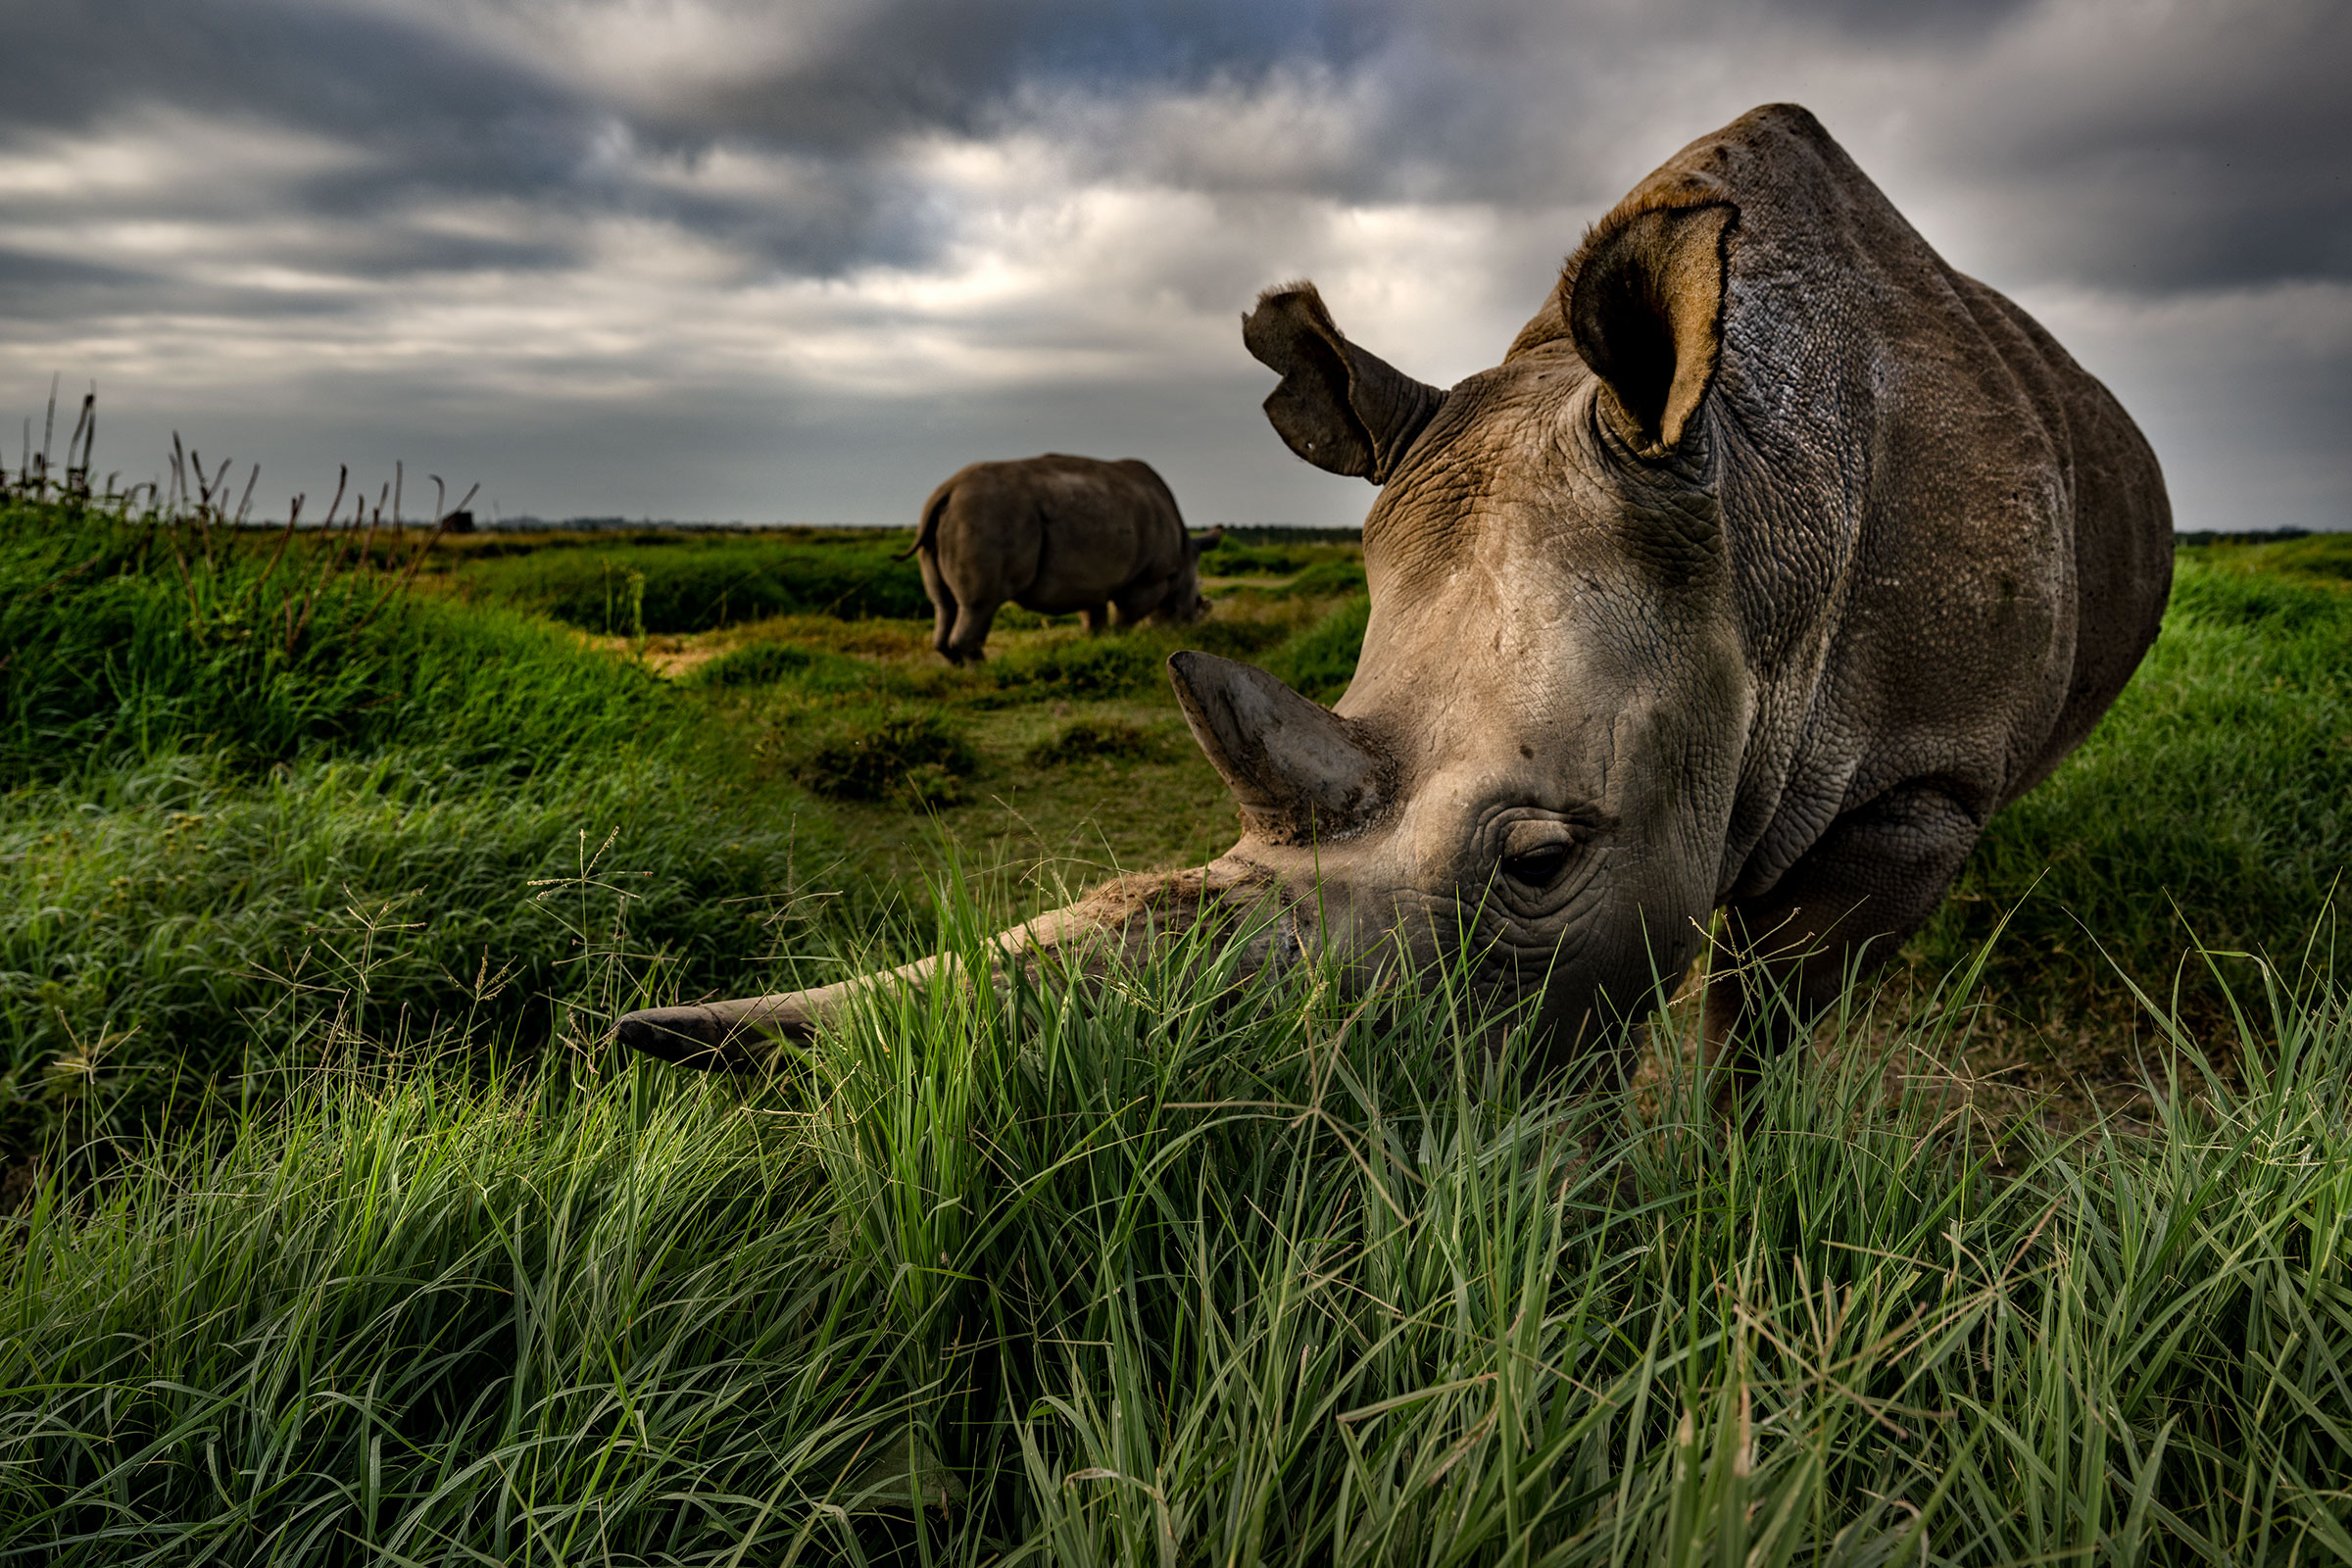 Rhino extinction